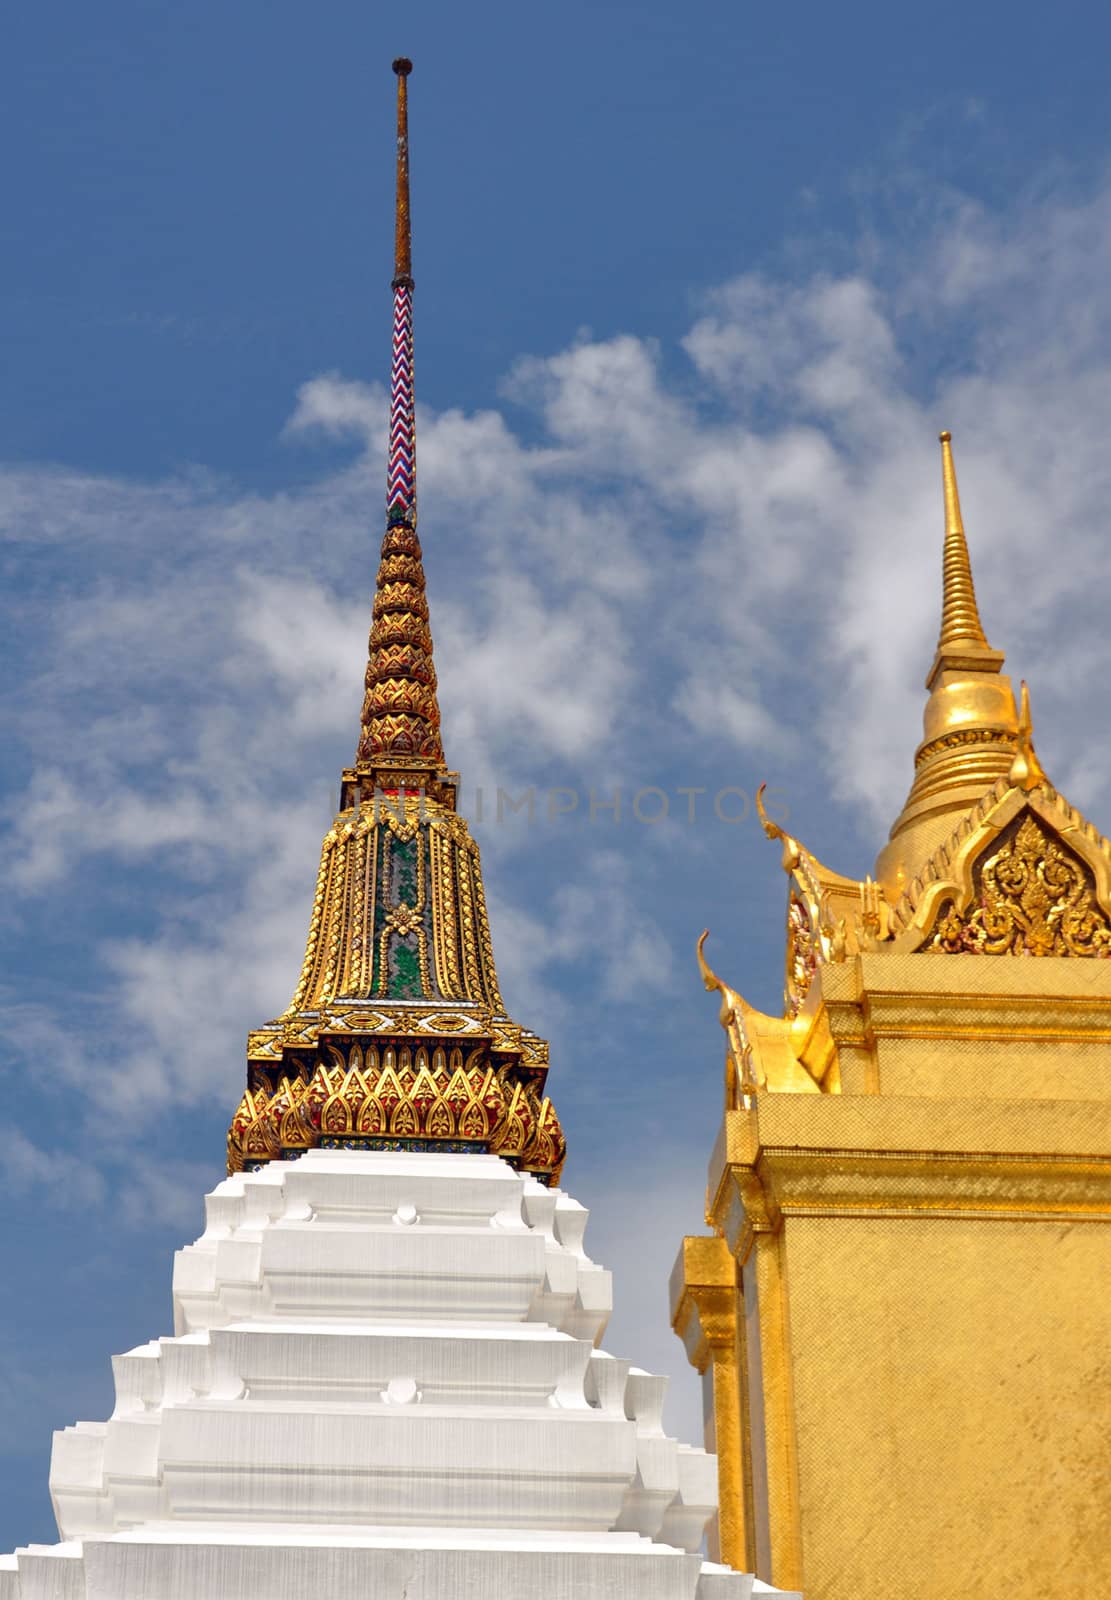 Grand Palace skyline Bangkok by dpe123